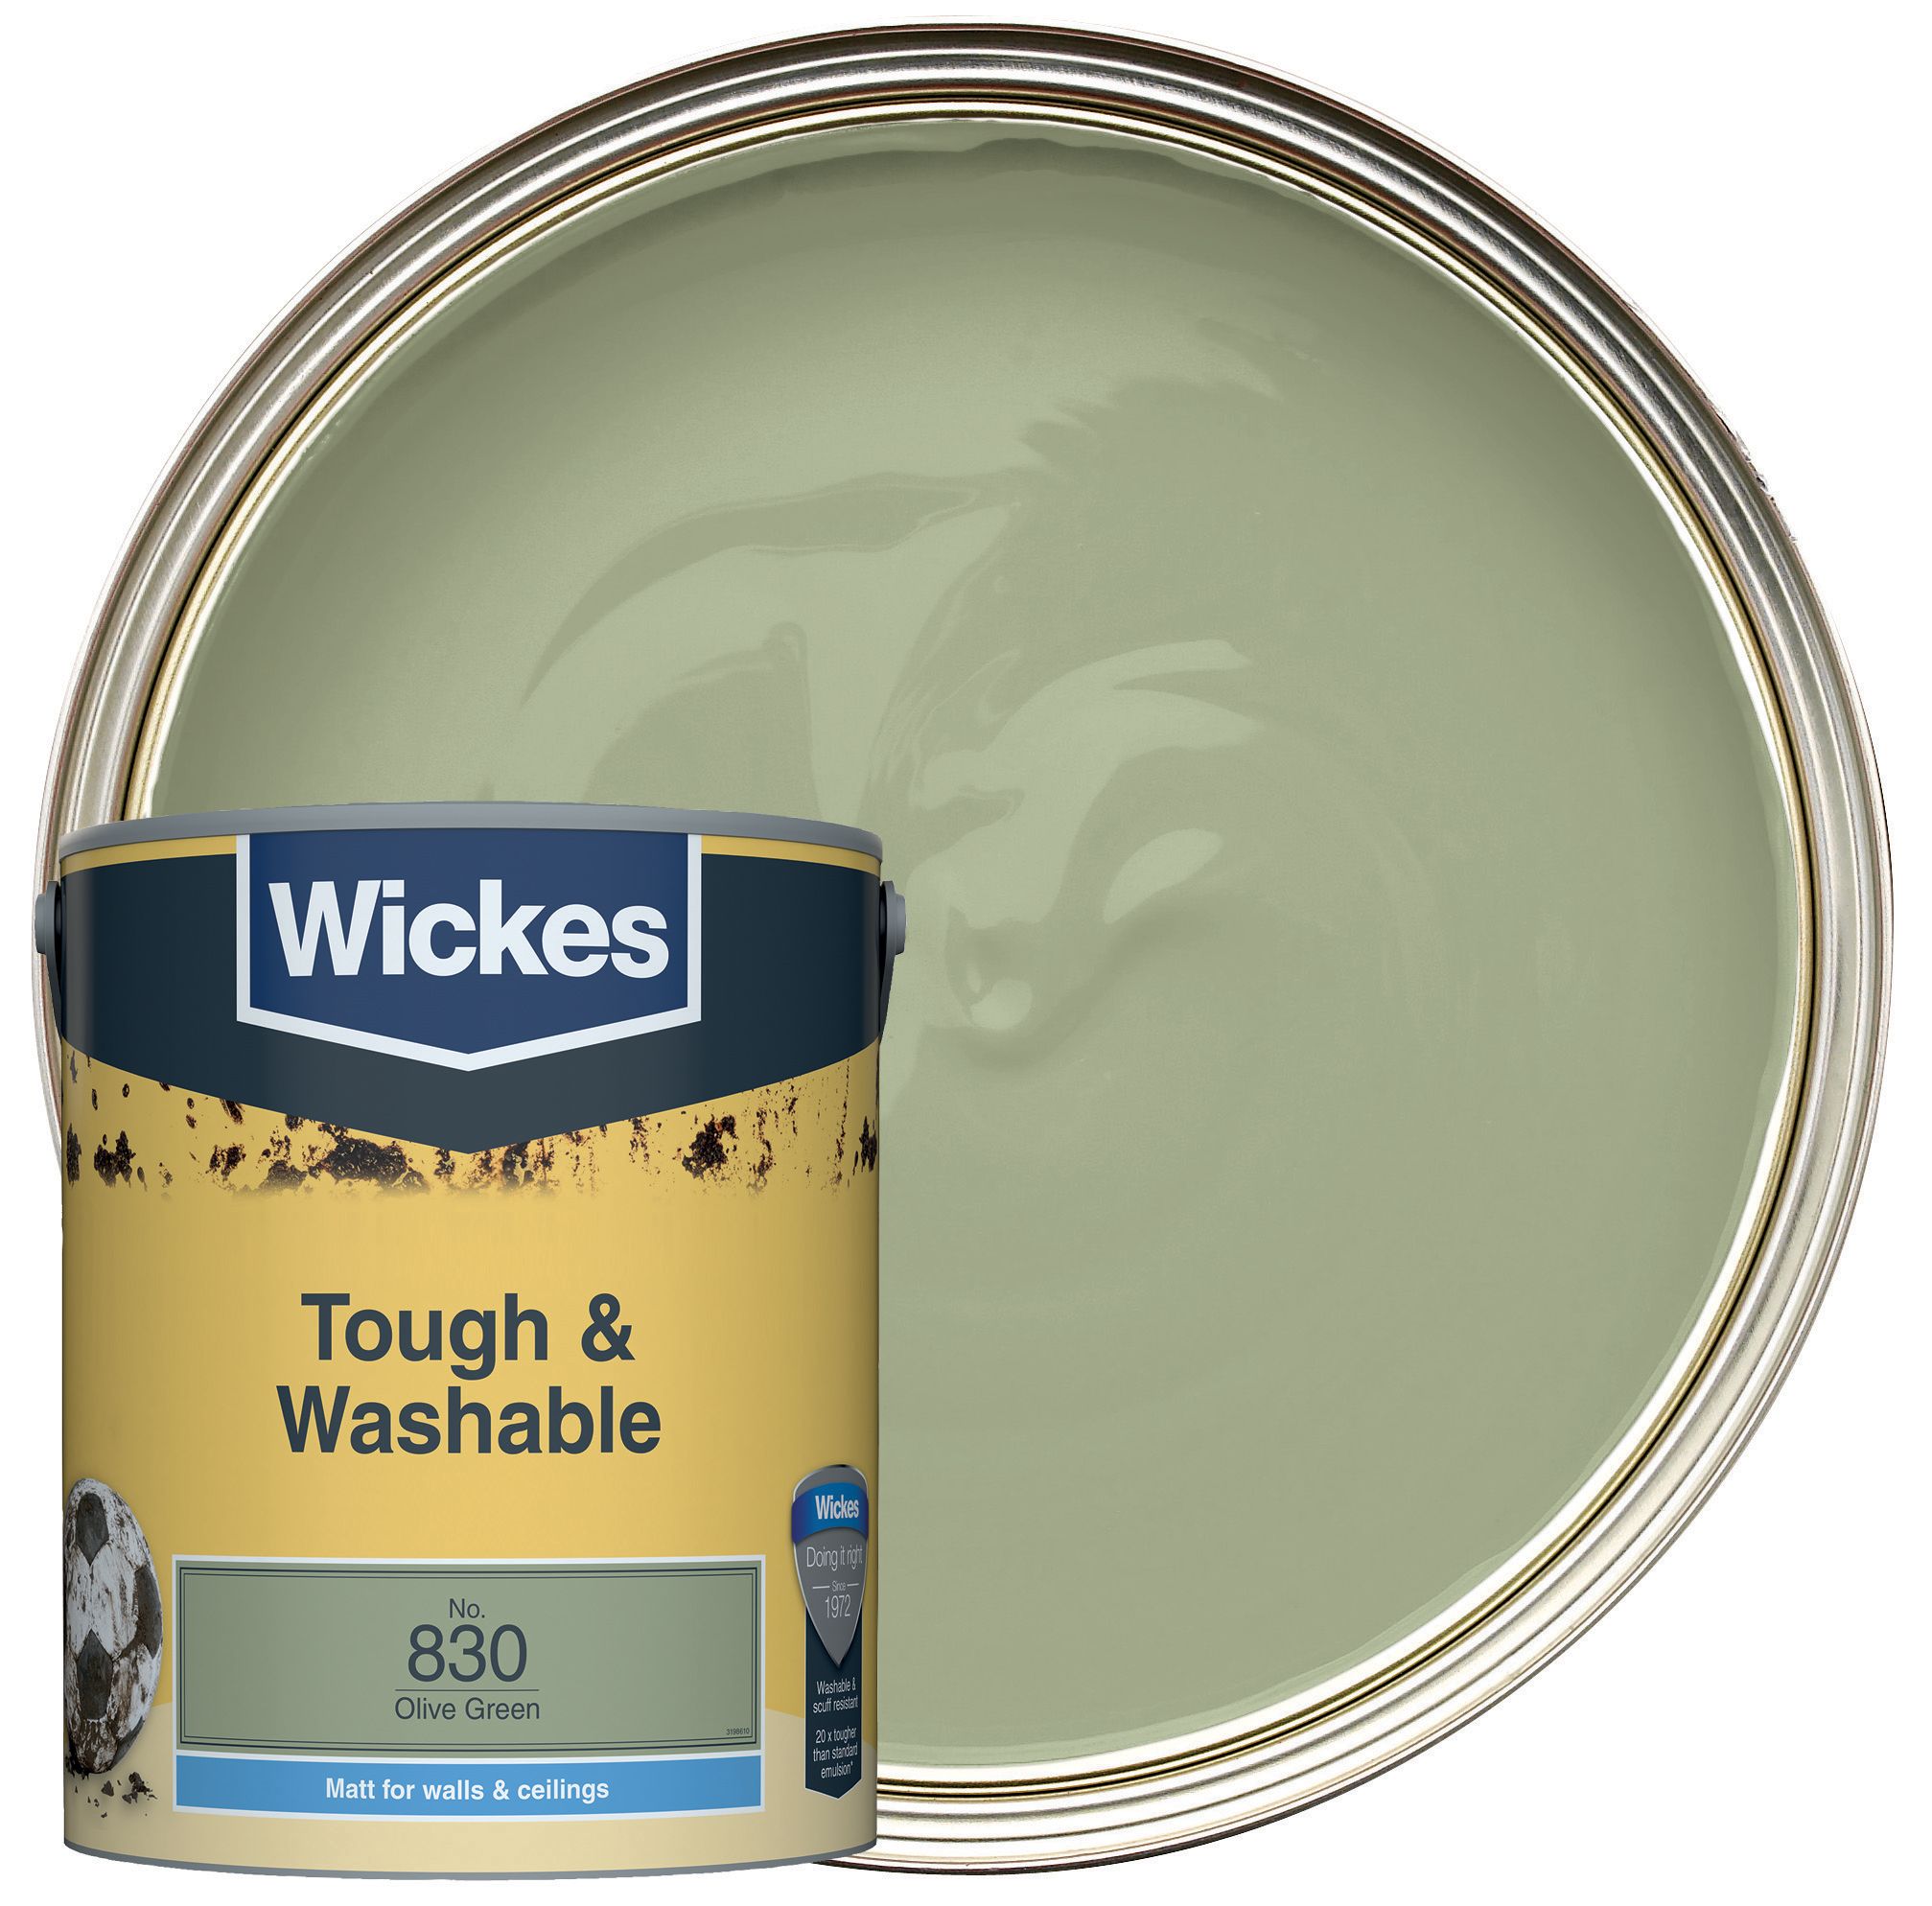 Wickes Olive Green - No. 830 Tough & Washable Matt Emulsion Paint - 5L